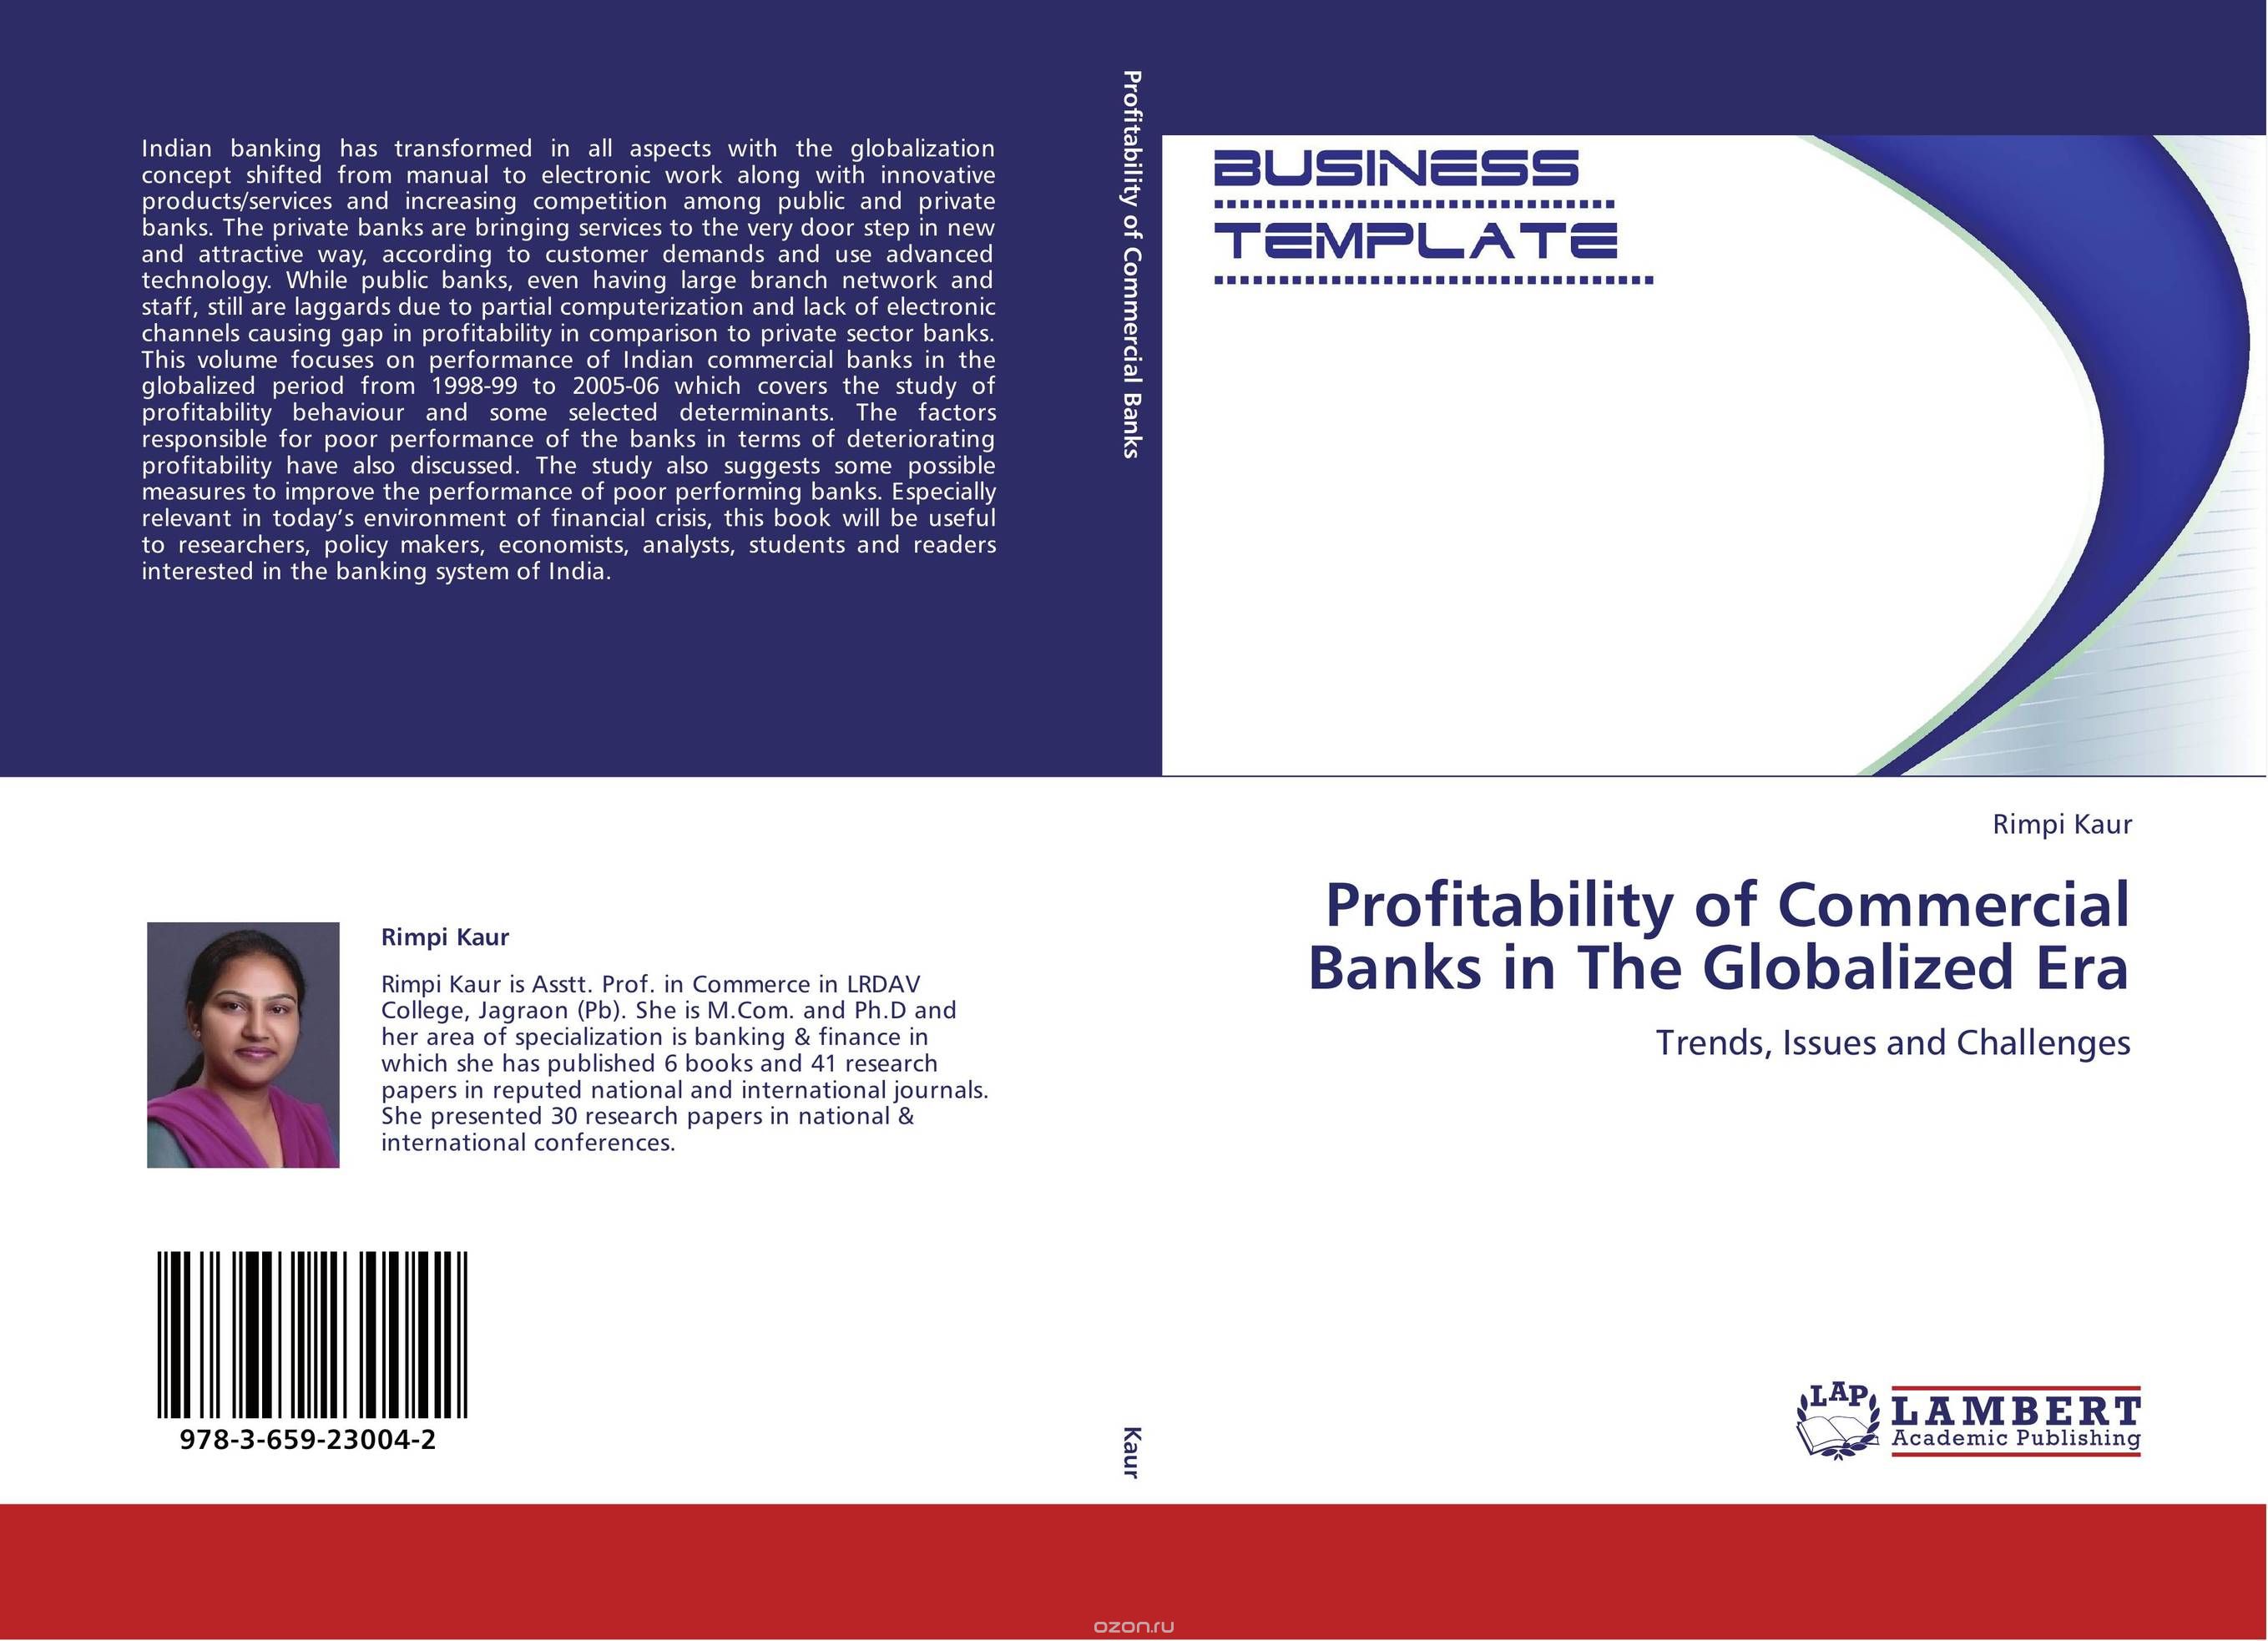 Скачать книгу "Profitability of Commercial Banks in The Globalized Era"